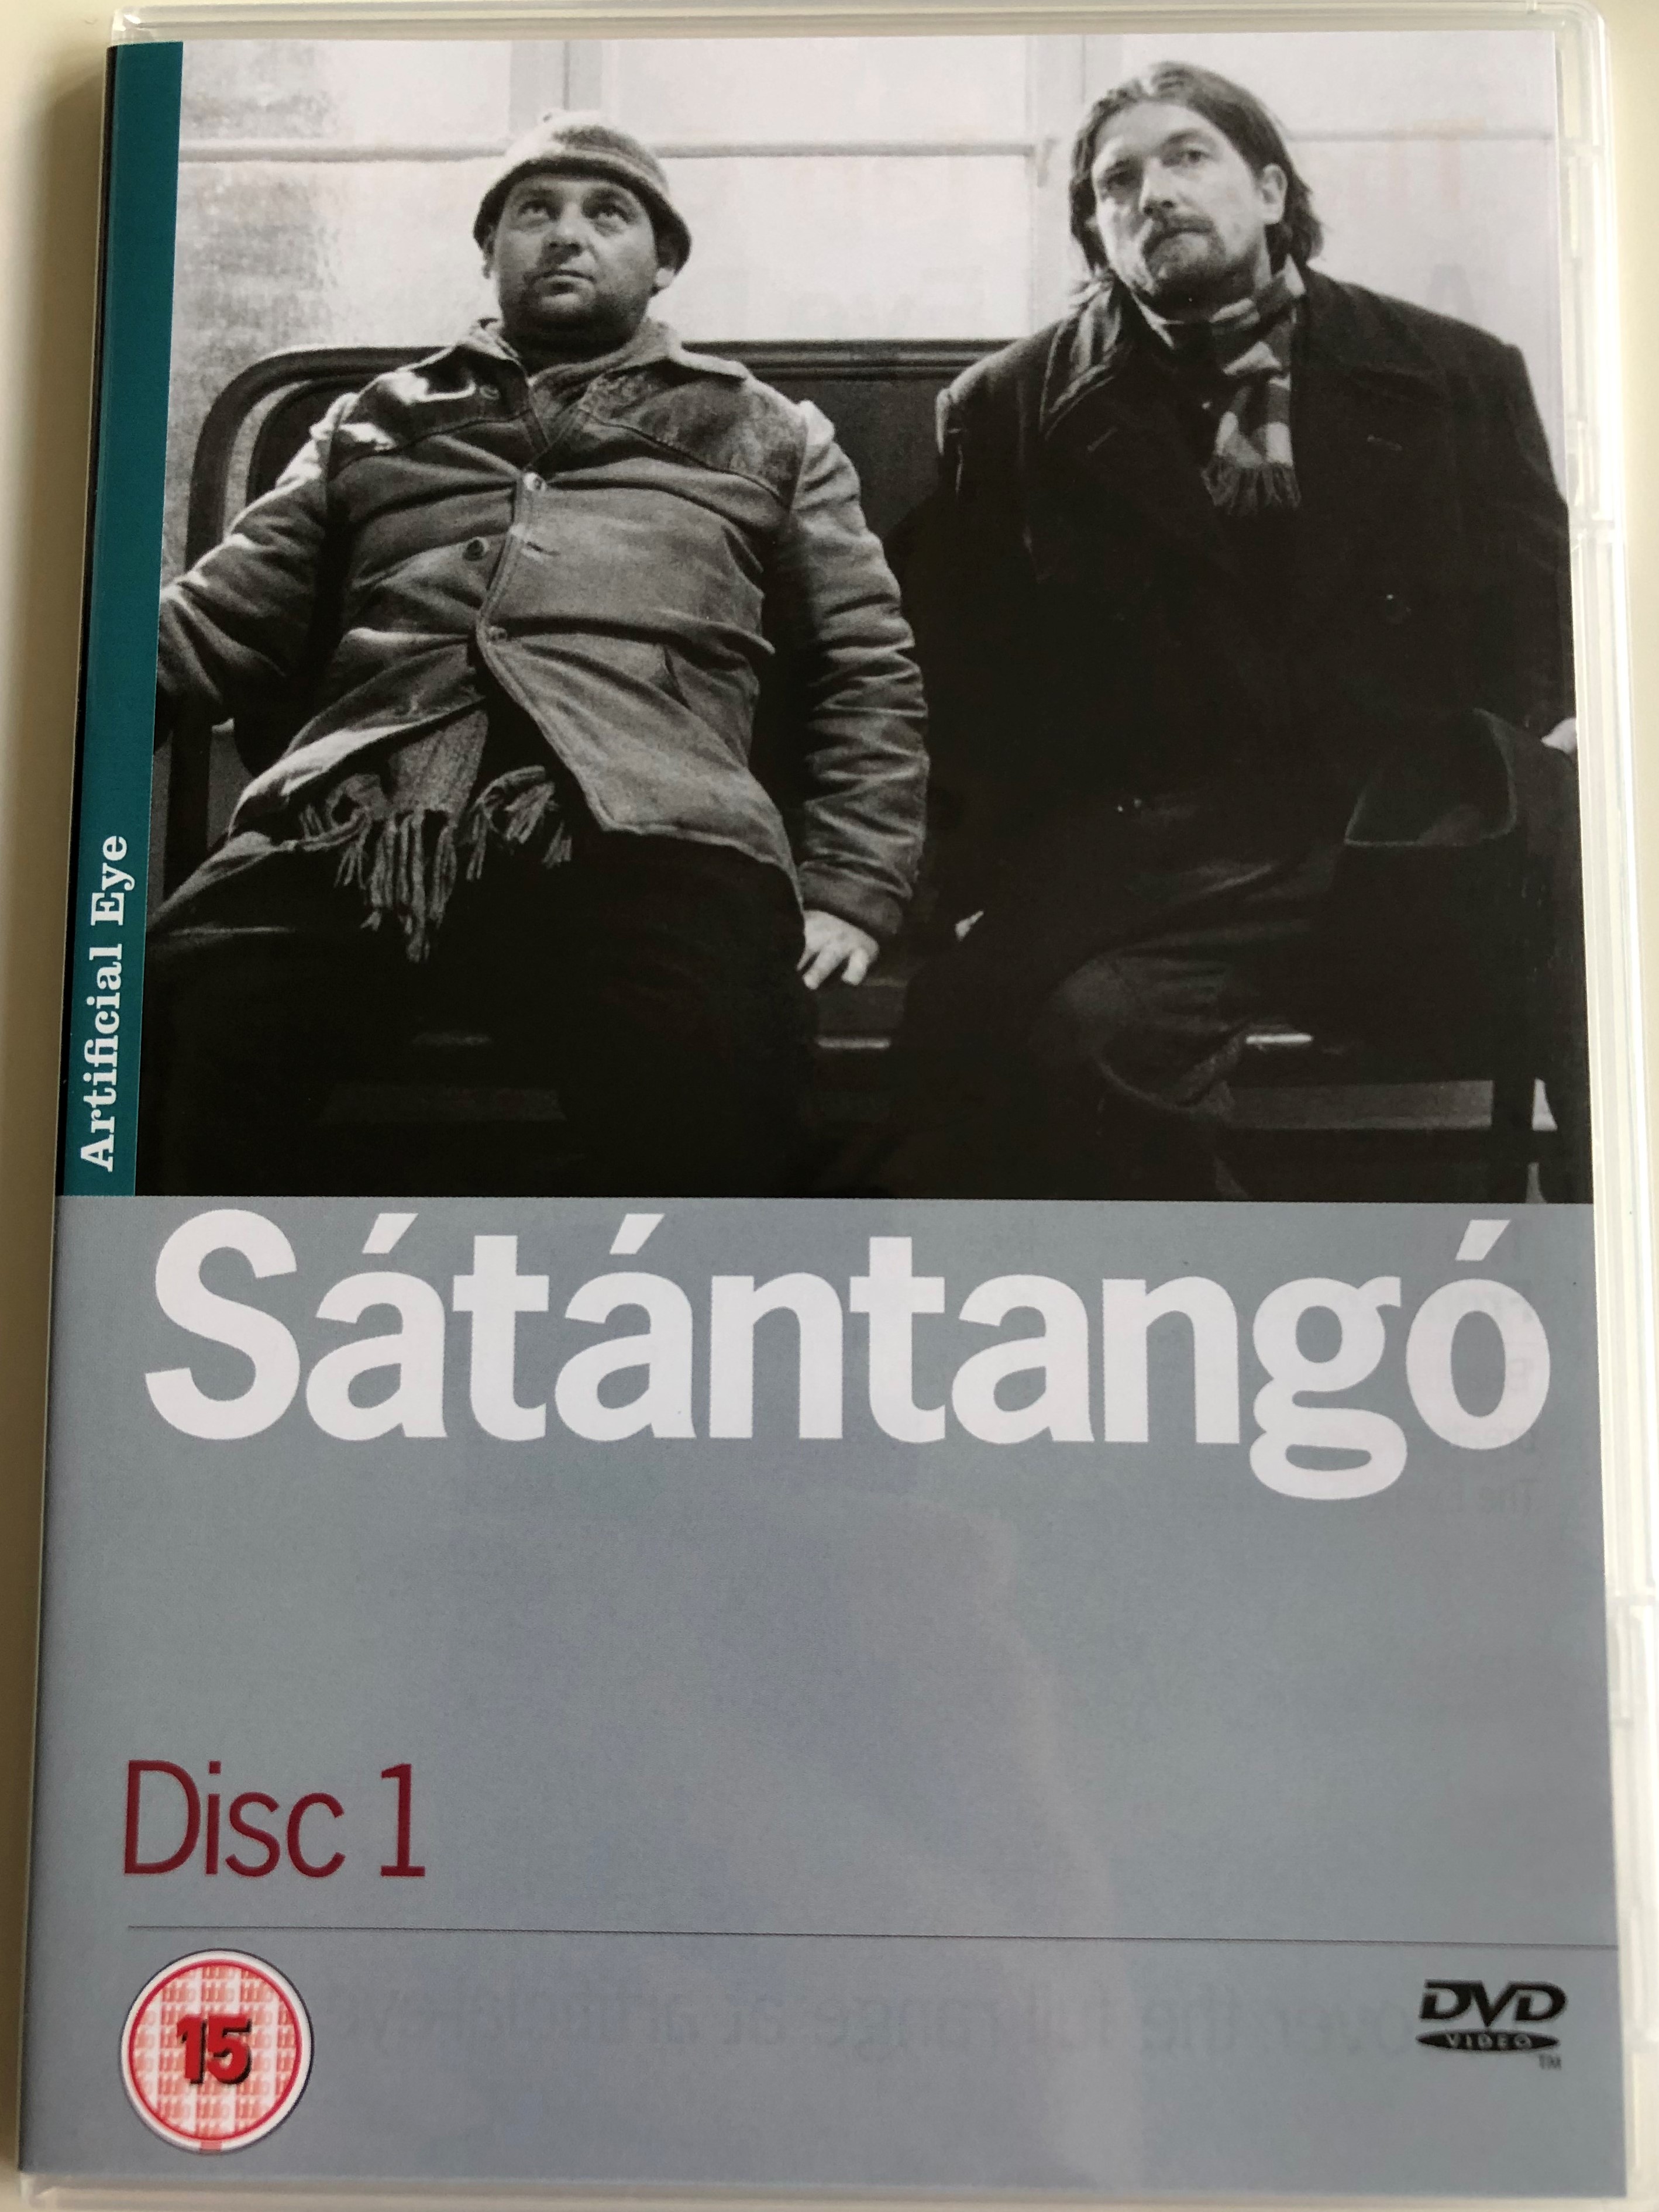 s-t-ntang-disc-1.-dvd-1994-satan-s-tango-directed-by-b-la-tarr-starring-mih-ly-v-g-putyi-horv-th-l-szl-lugossy-chapters-1-3-1-.jpg